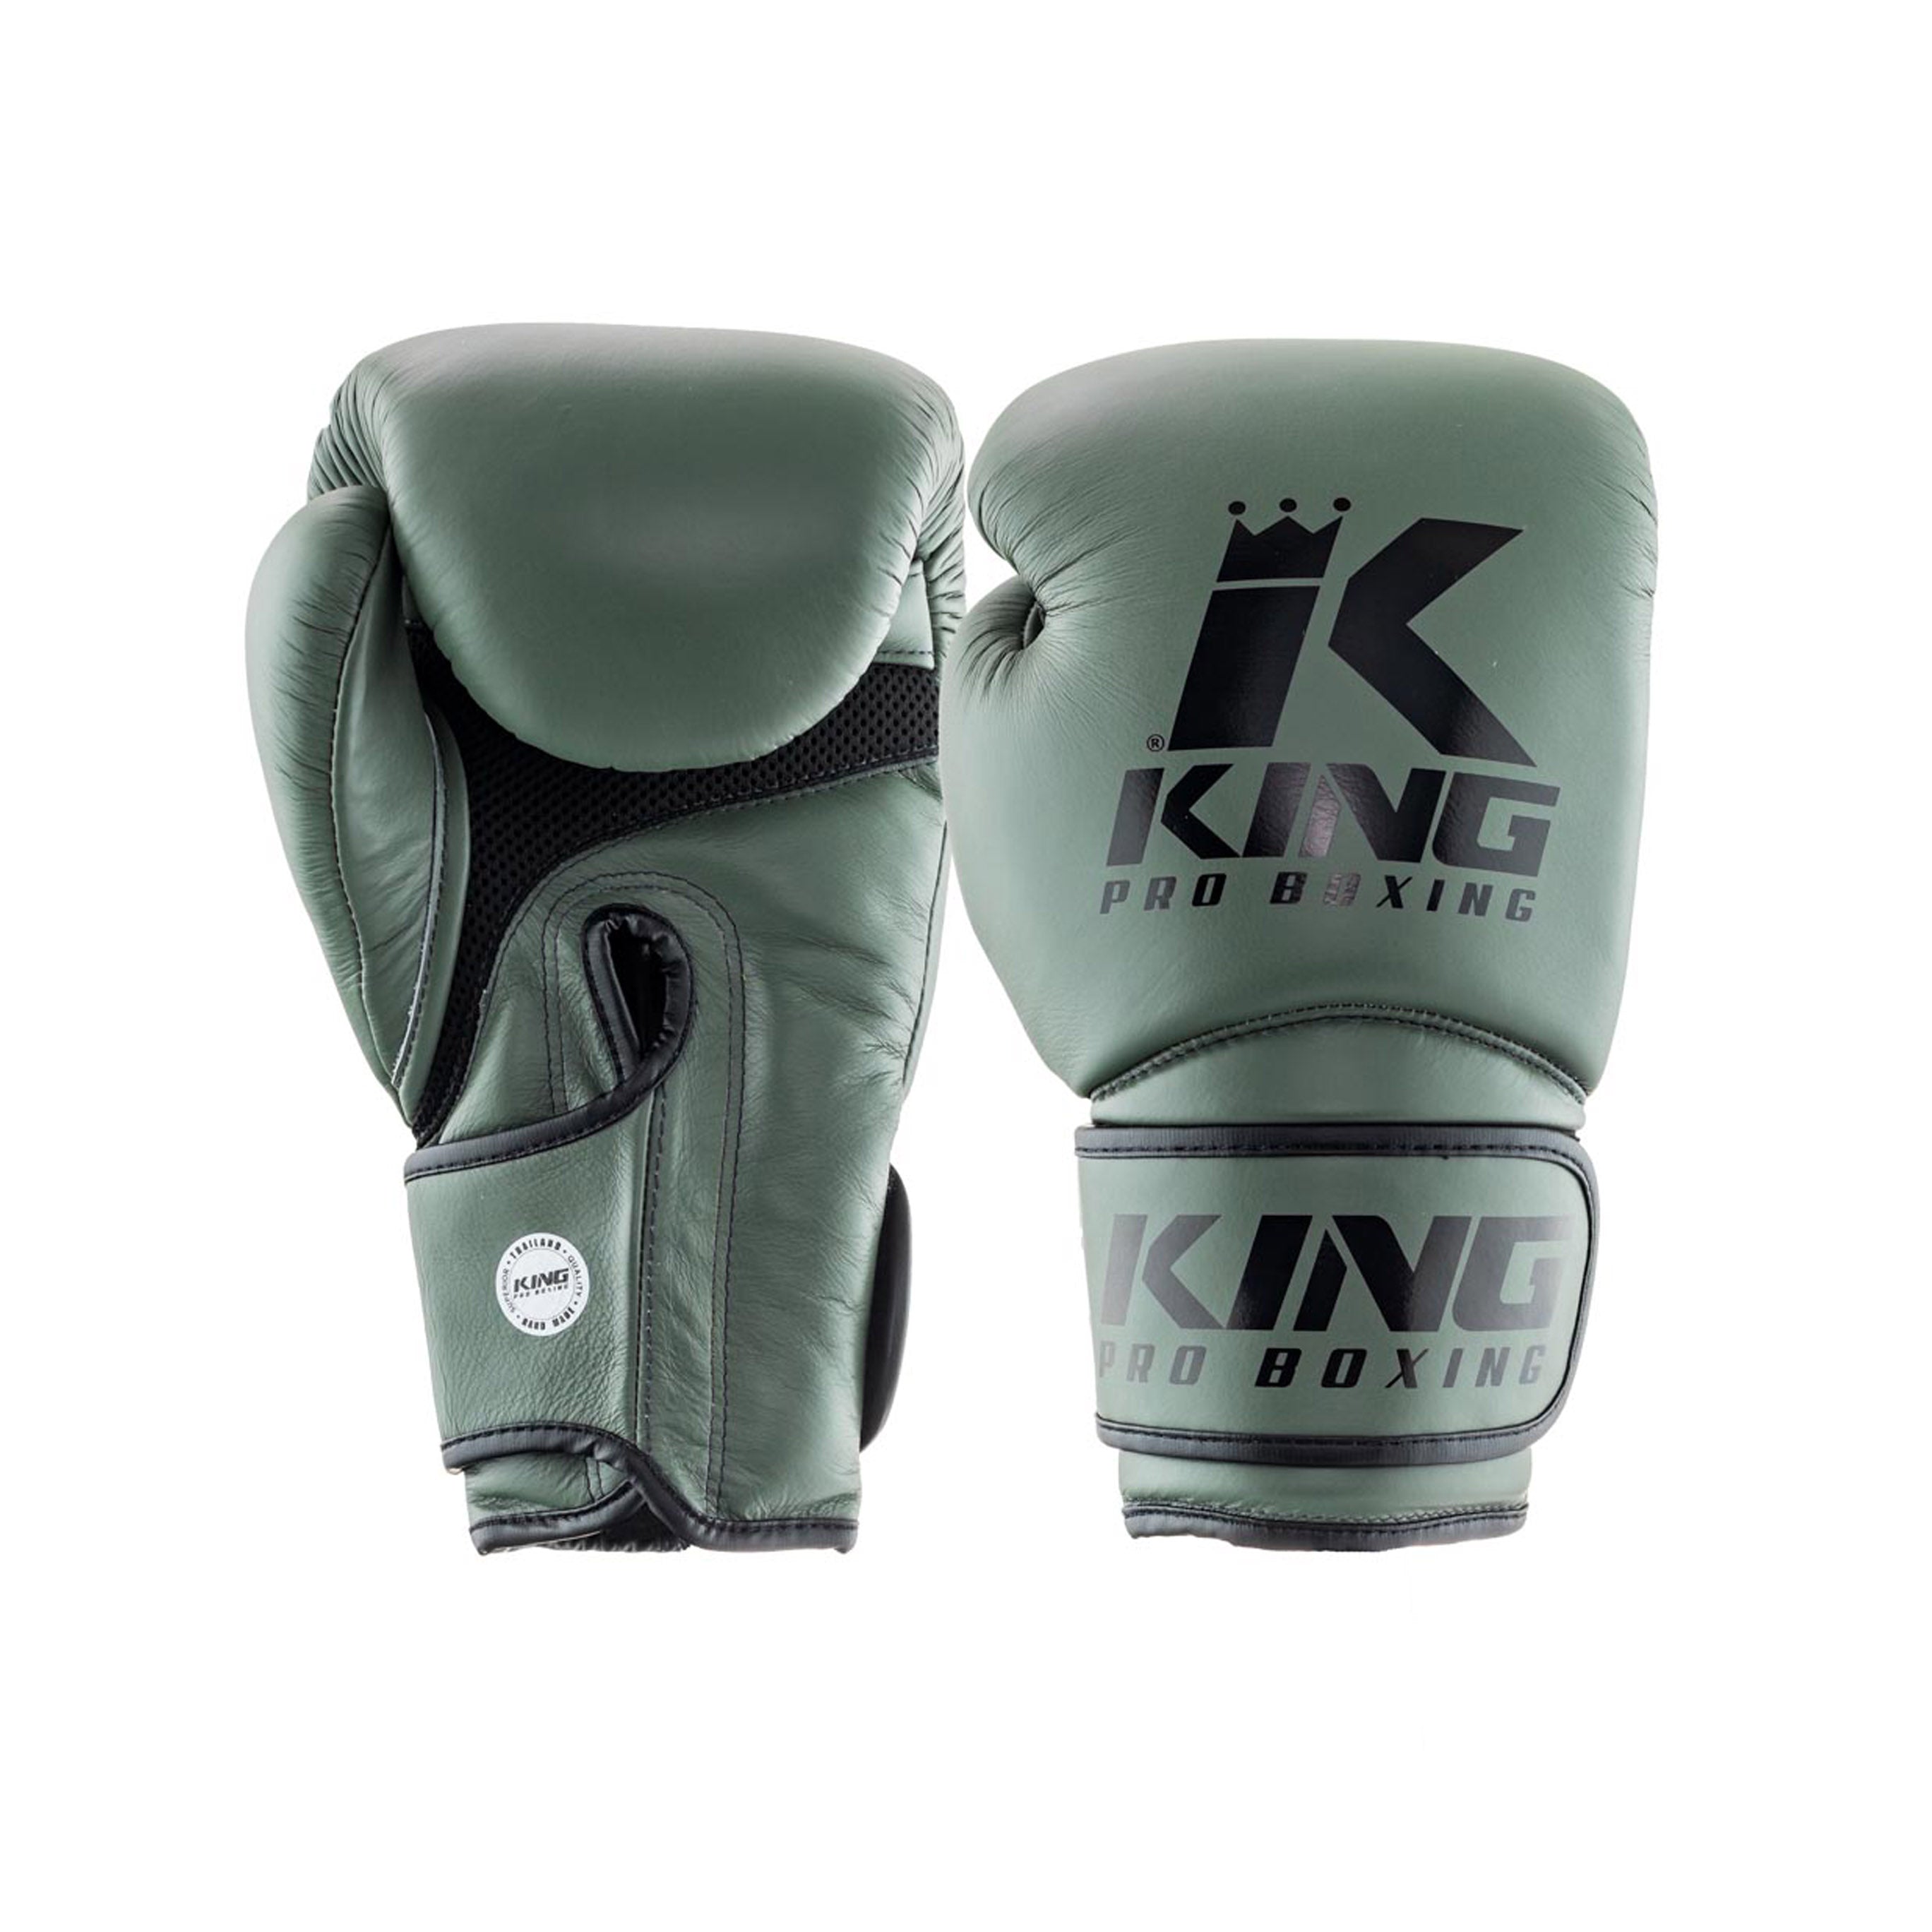 King PRO boxing boxing gloves - STAR MESH 4